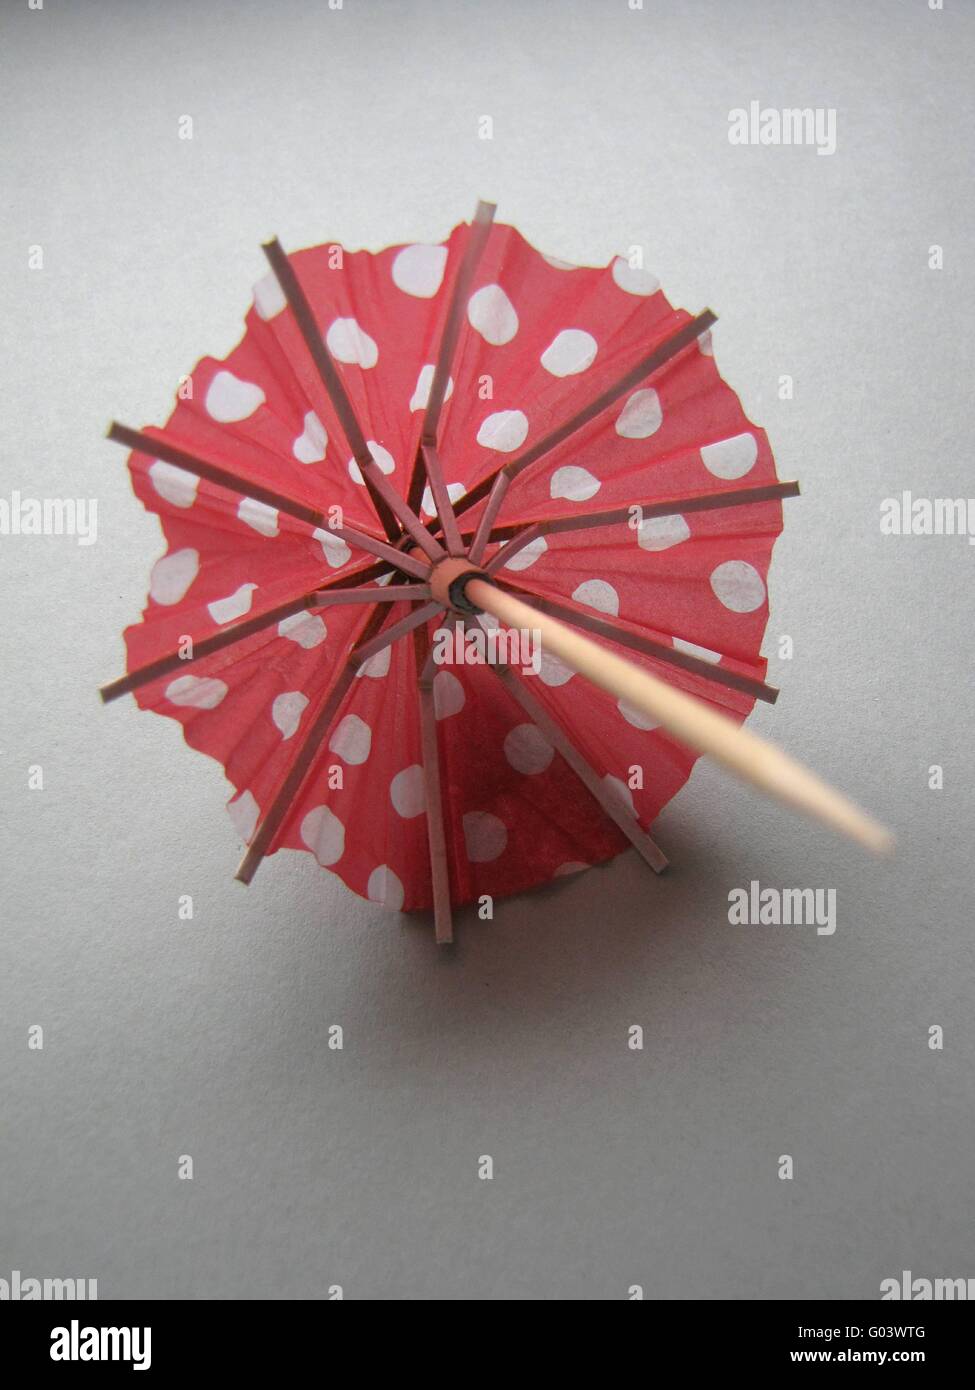 Cocktail umbrella Stock Photo